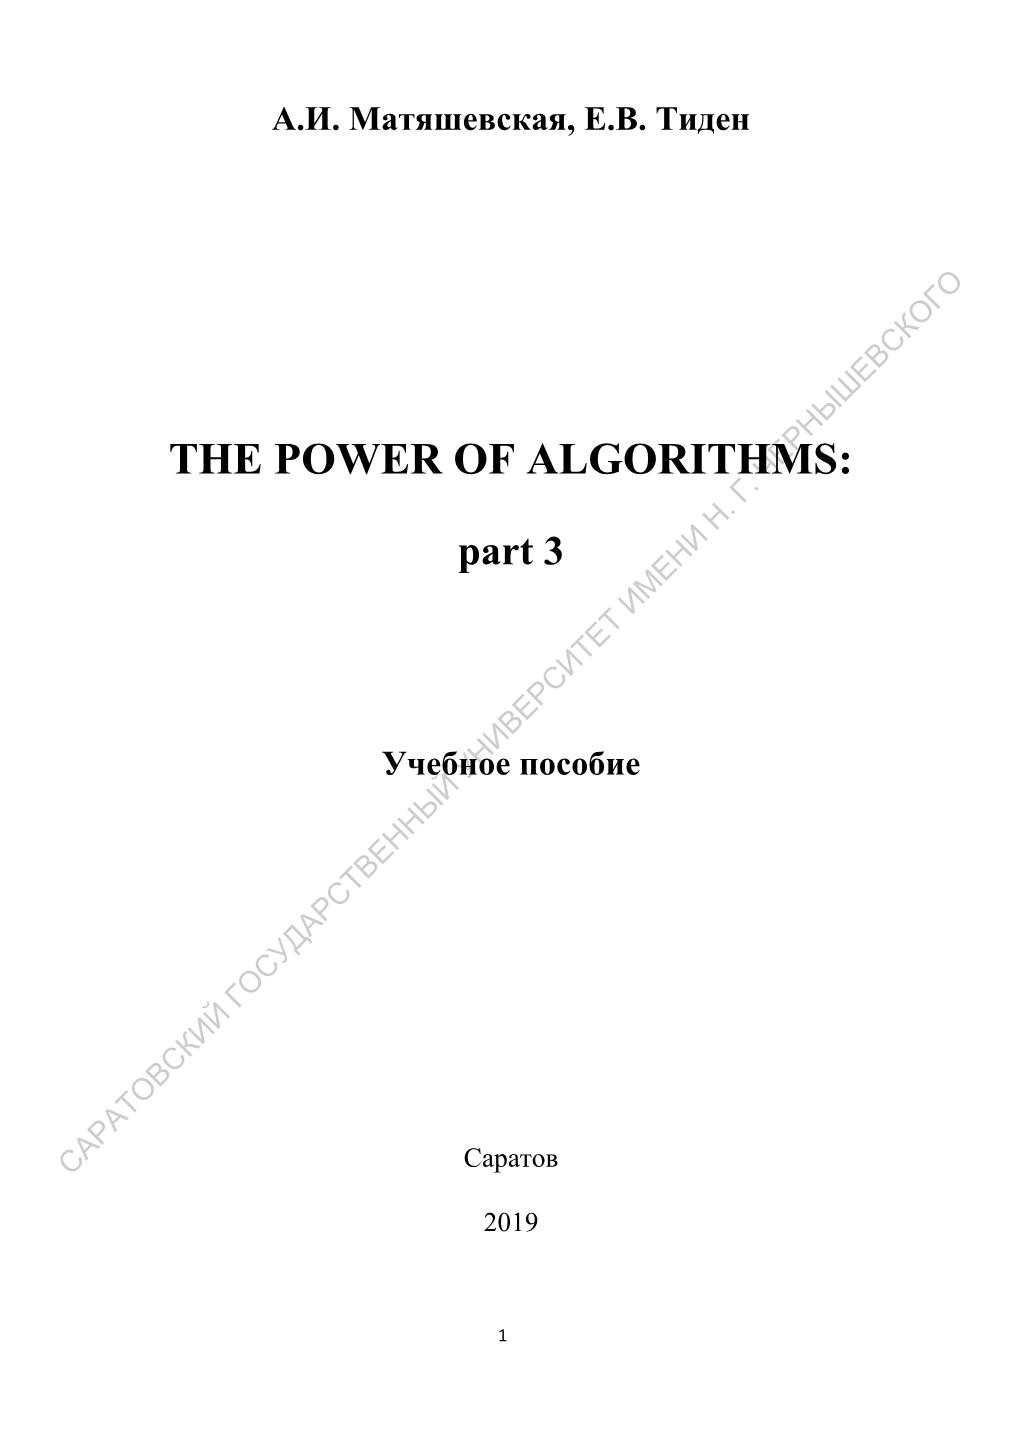 The Power of Algorithms:Ч